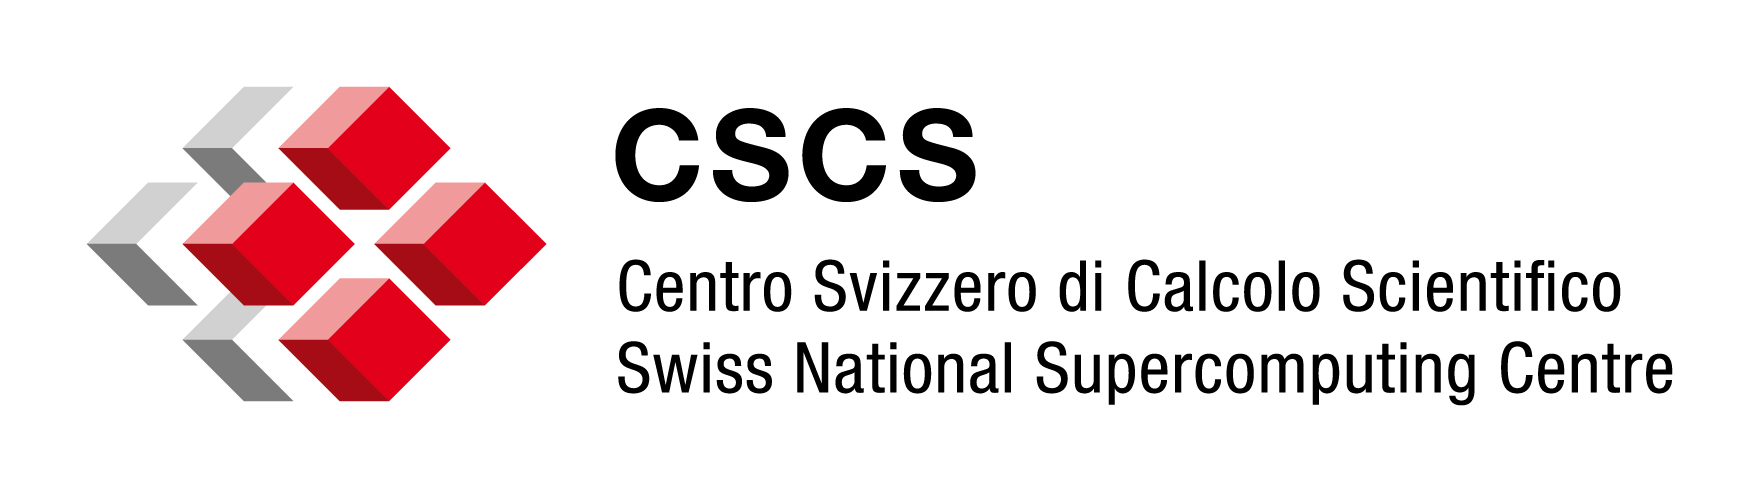 logo-cscs.jpg